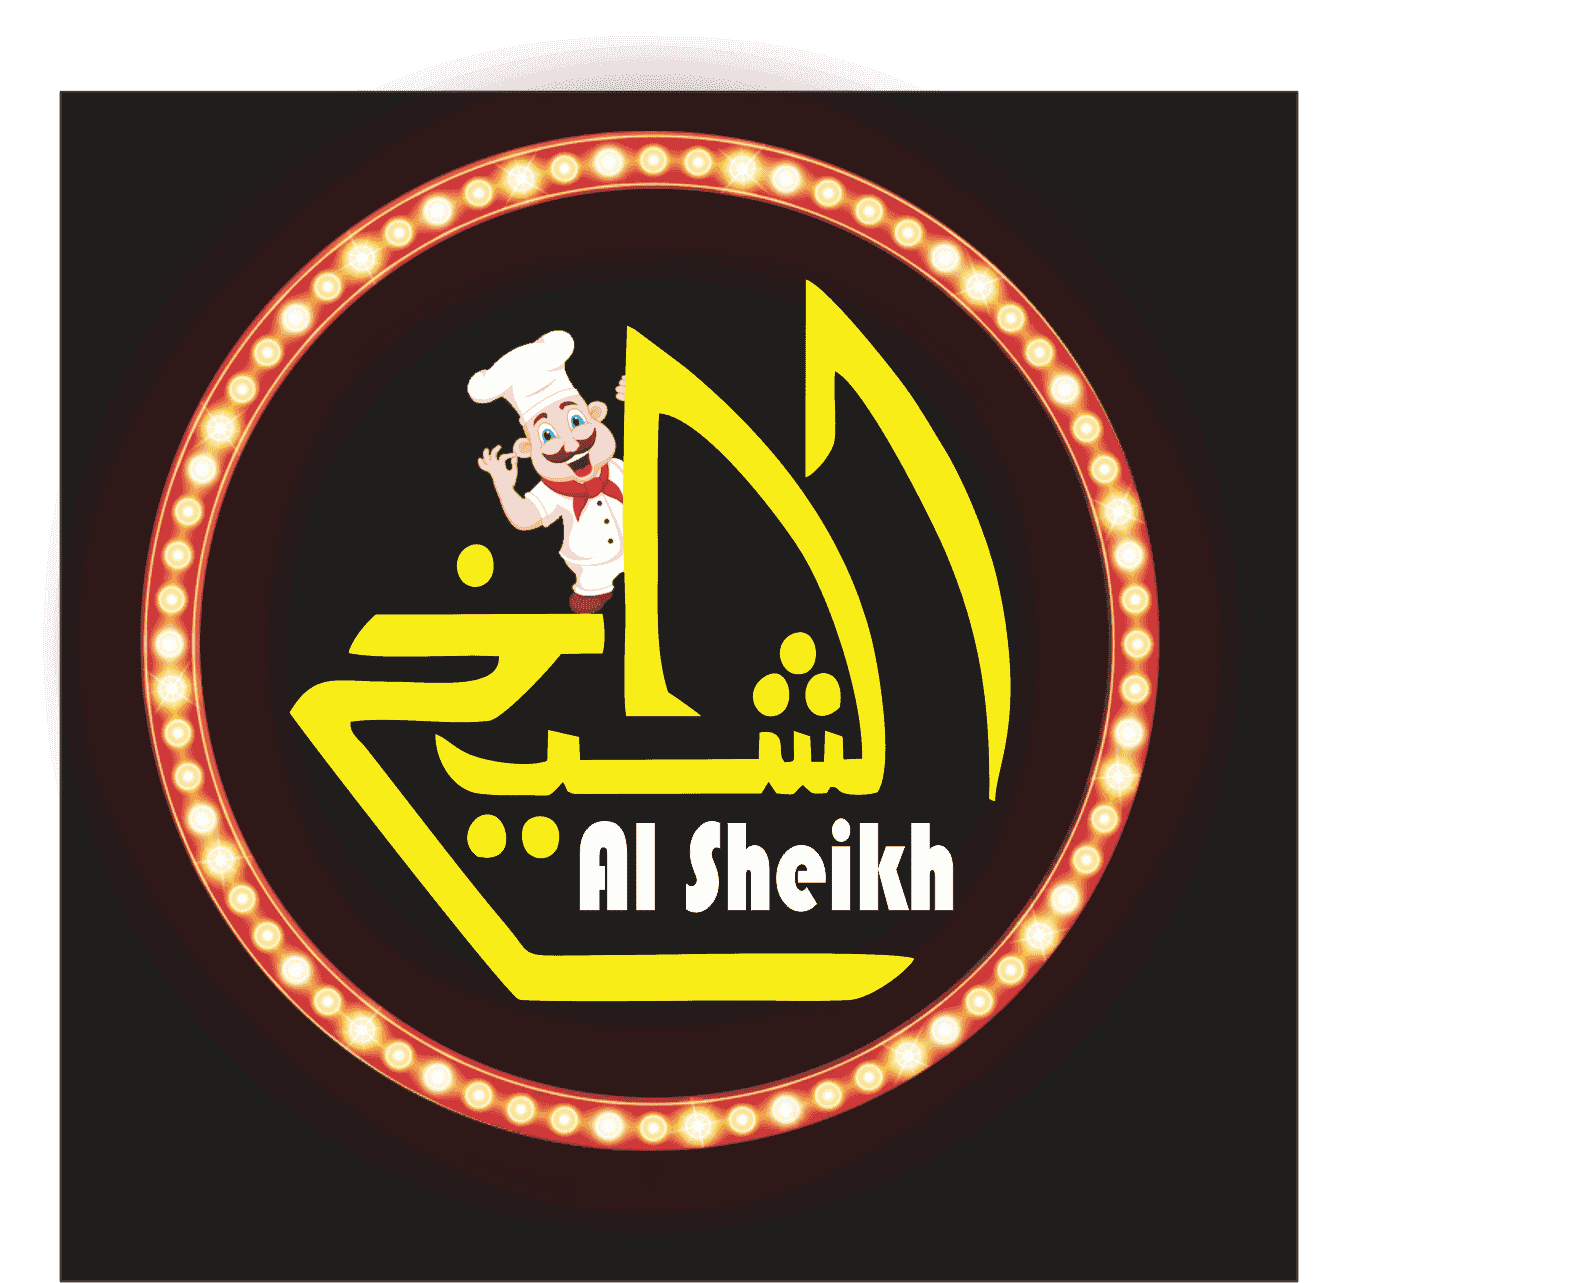 Al-Sheikh Burger and Pizza